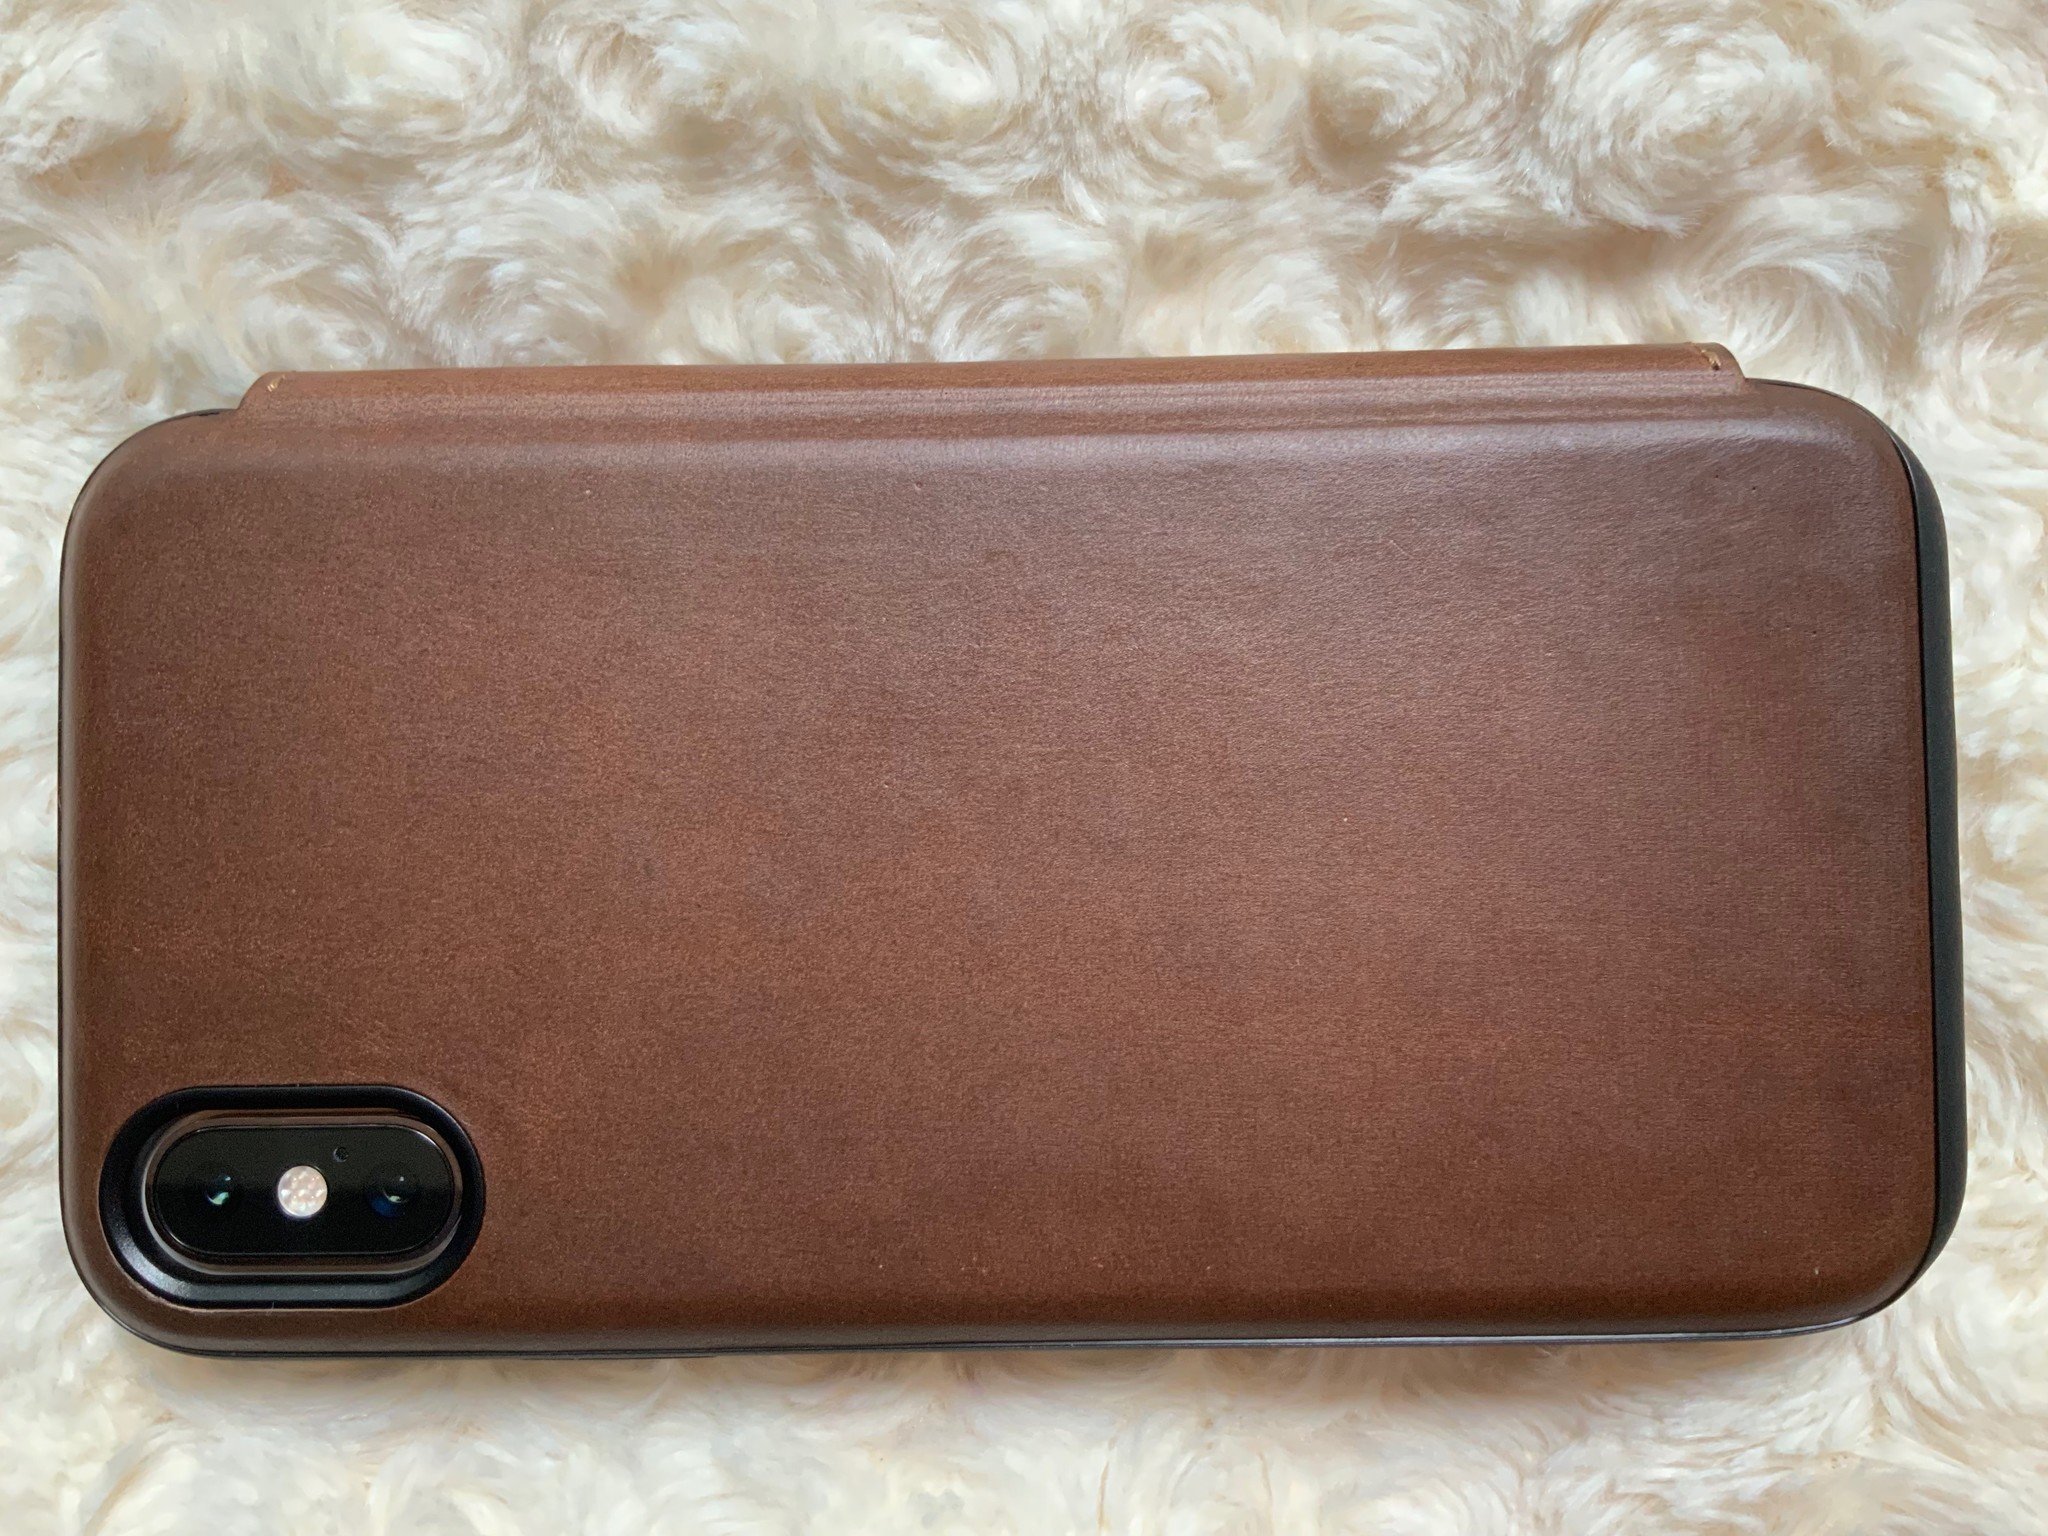 Nomad Rugged Tri-Folio iPhone wallet case 